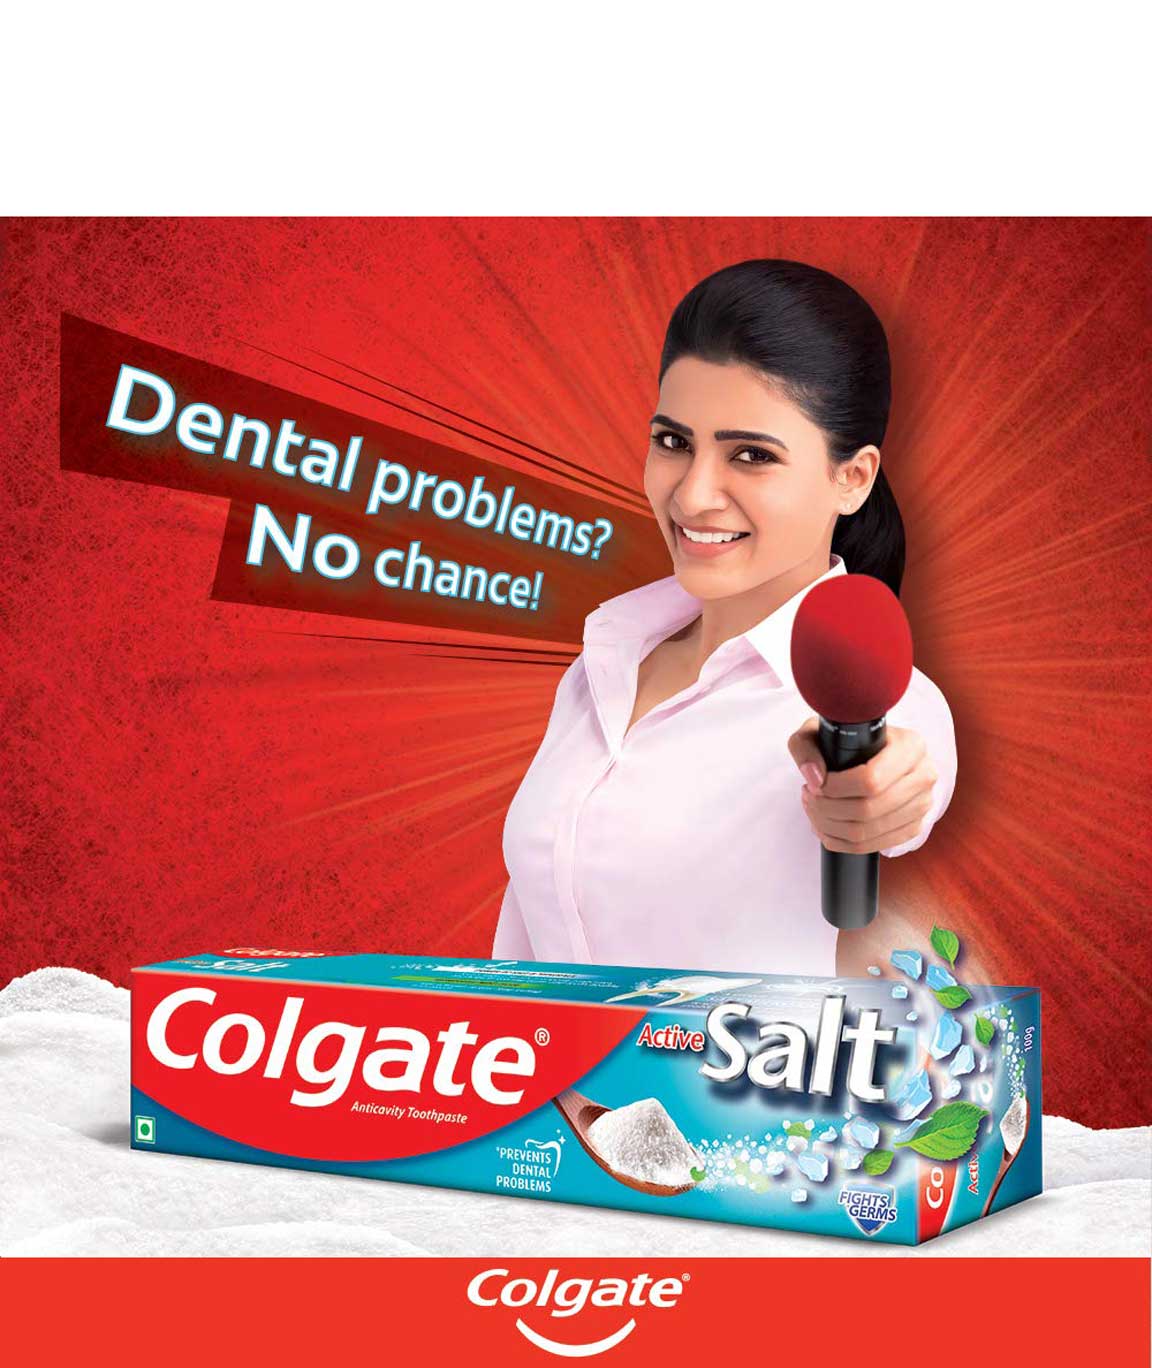 colgate toothpaste ads